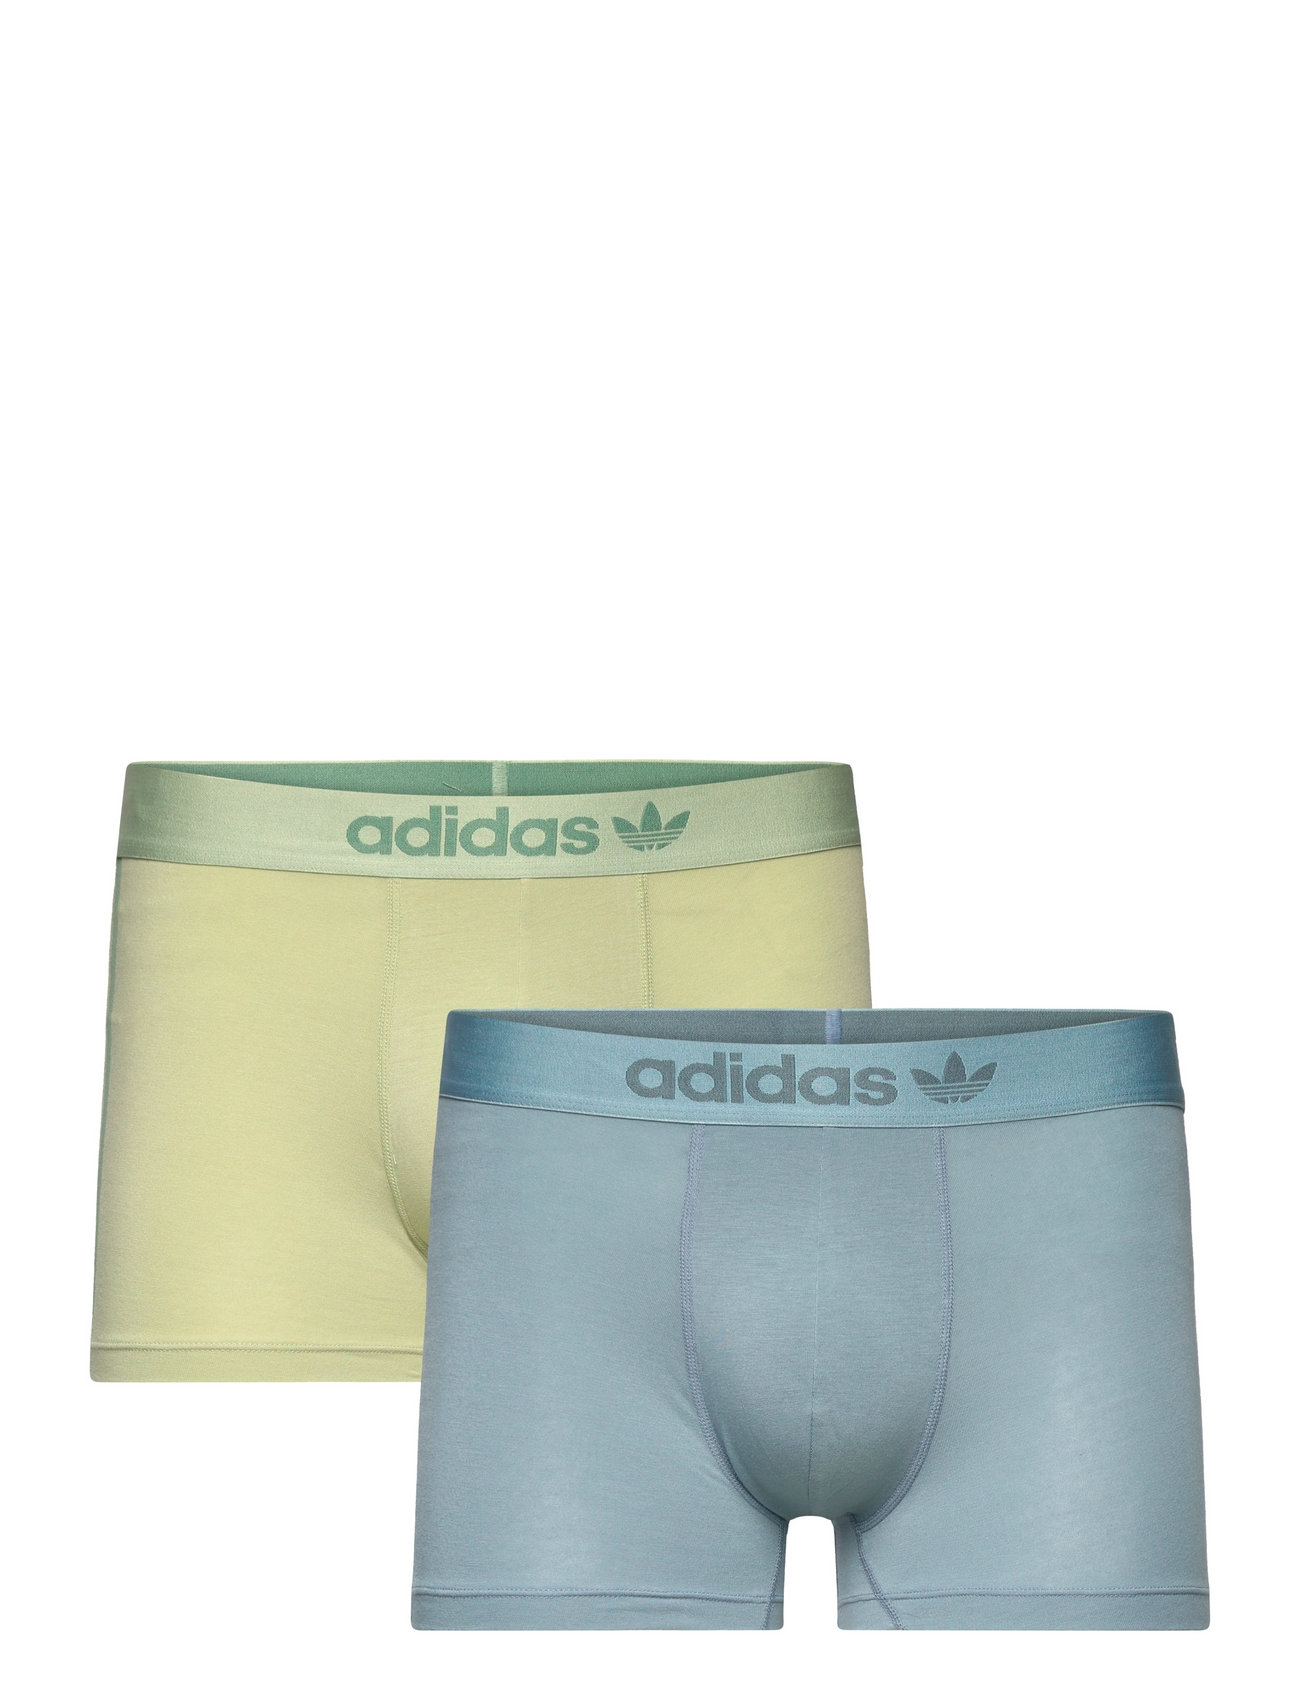 adidas Originals Underwear Trunks Boxers 